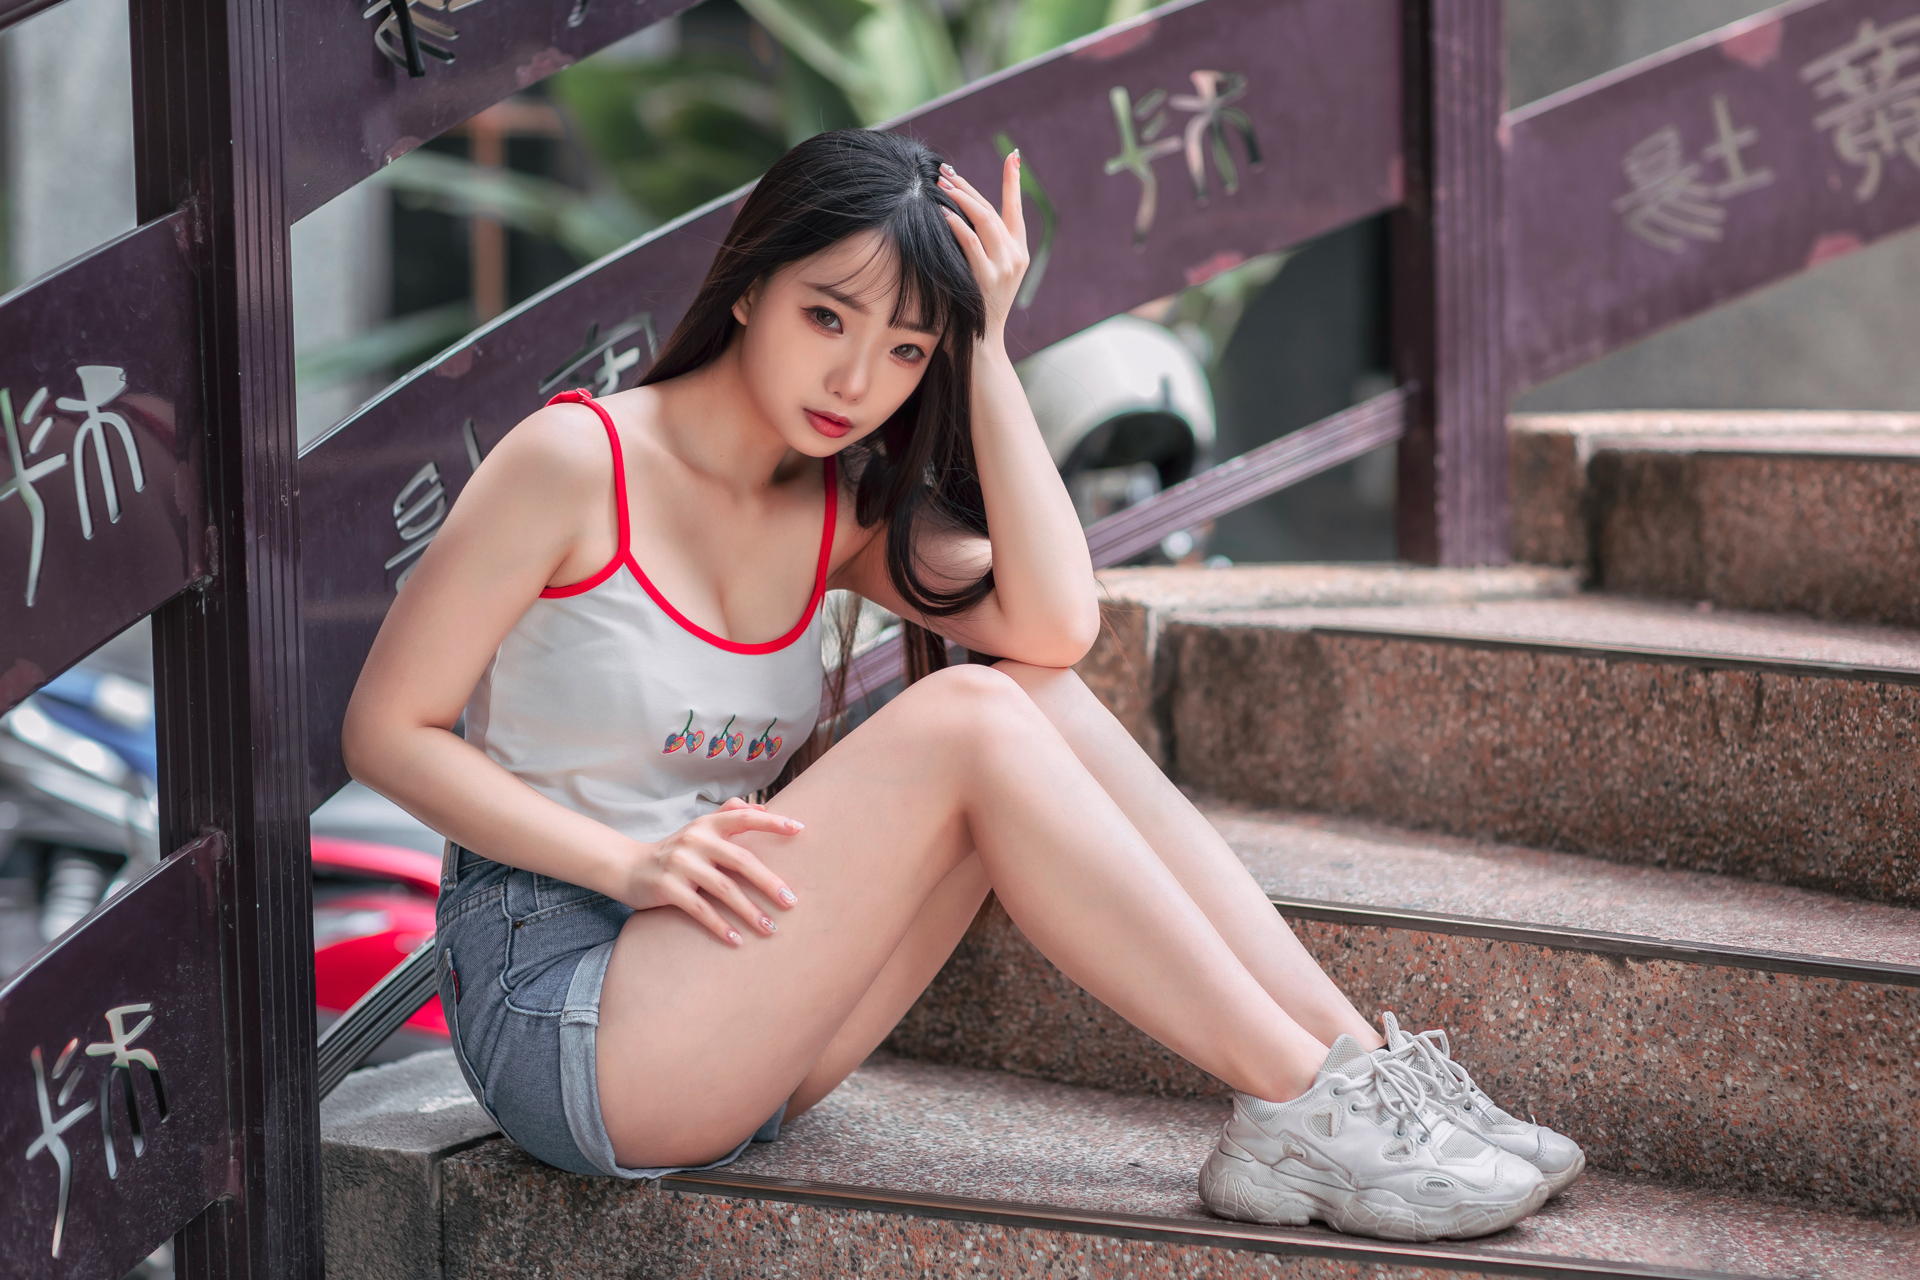 Asian Model Women Long Hair Dark Hair Stairs Railings Sneakers Short Tops Ning Shioulin Sitting Lean 1920x1280